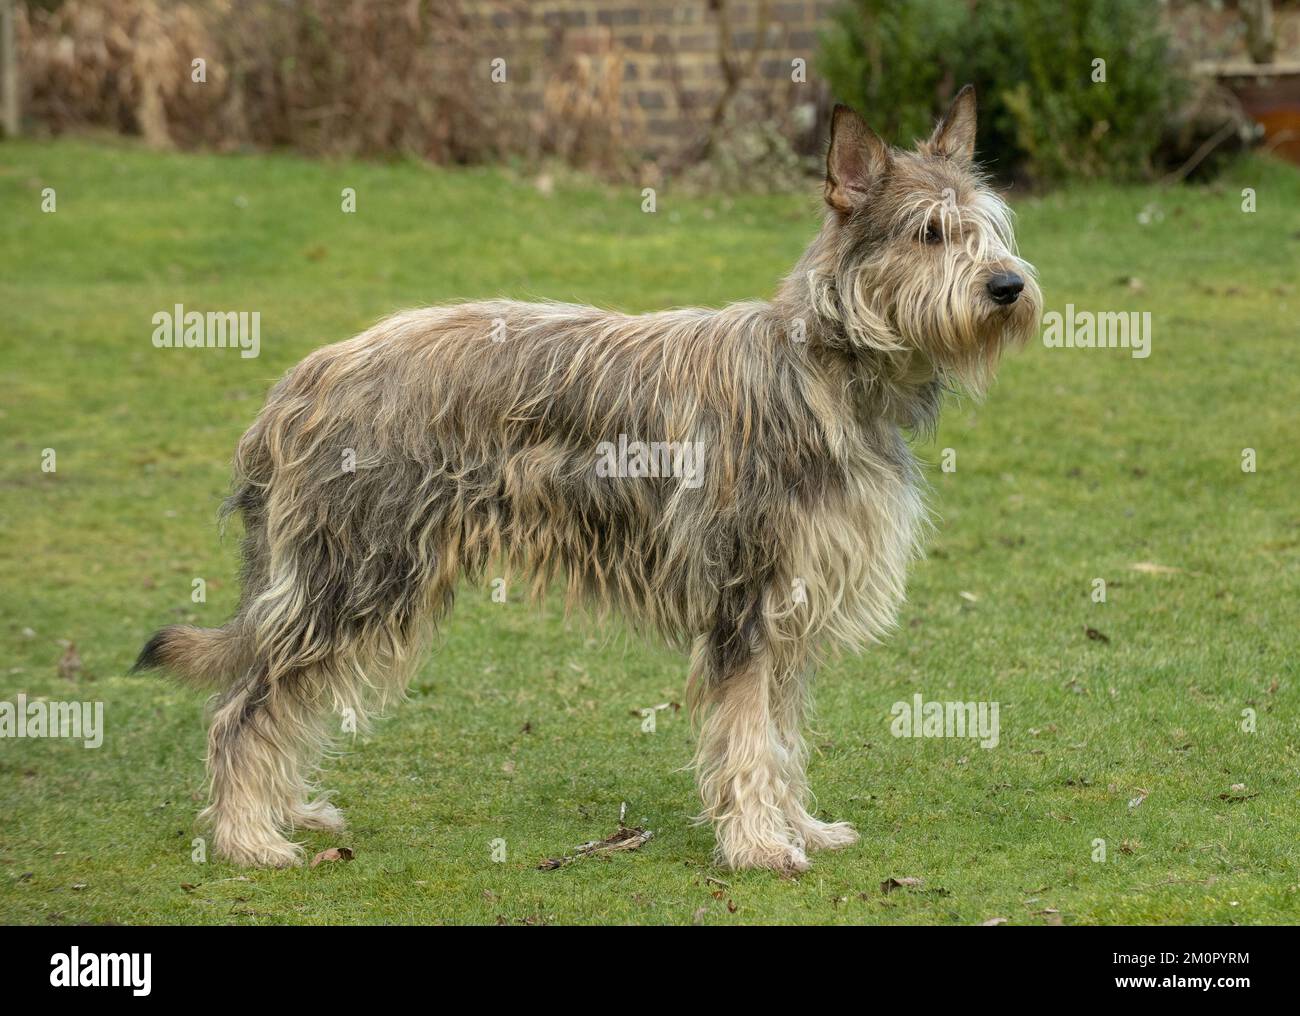 DOG. Picardy sheepdog, standing Stock Photo